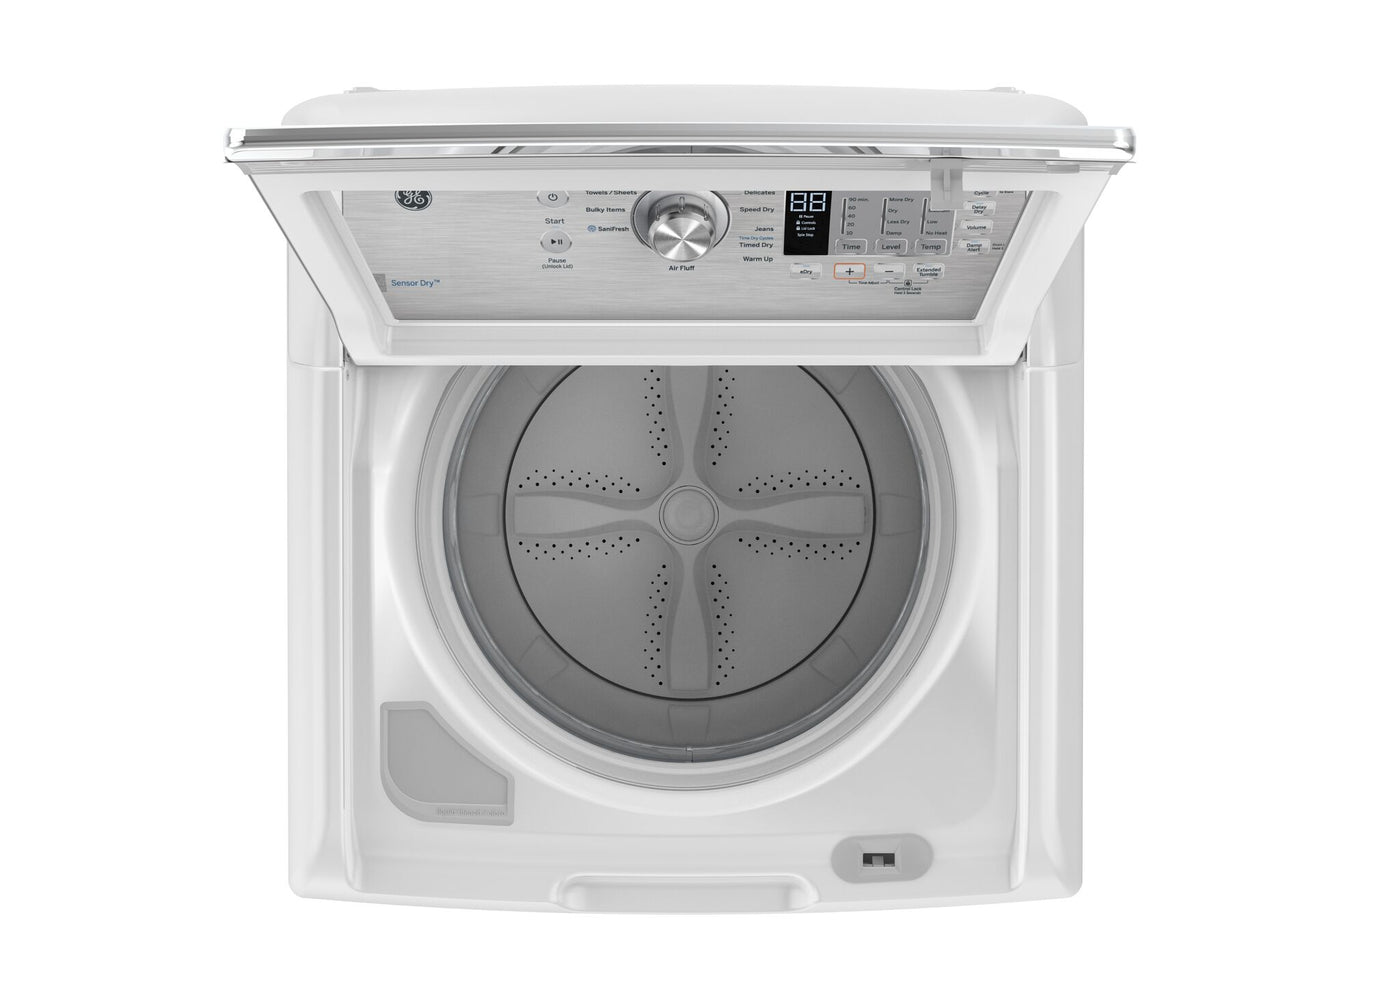 GE White Top-Load Washer (5.3 Cu. Ft.) & GE White Gas Dryer (7.4 Cu. Ft.) - GTW680BMRWS/GTD65GBMRWS